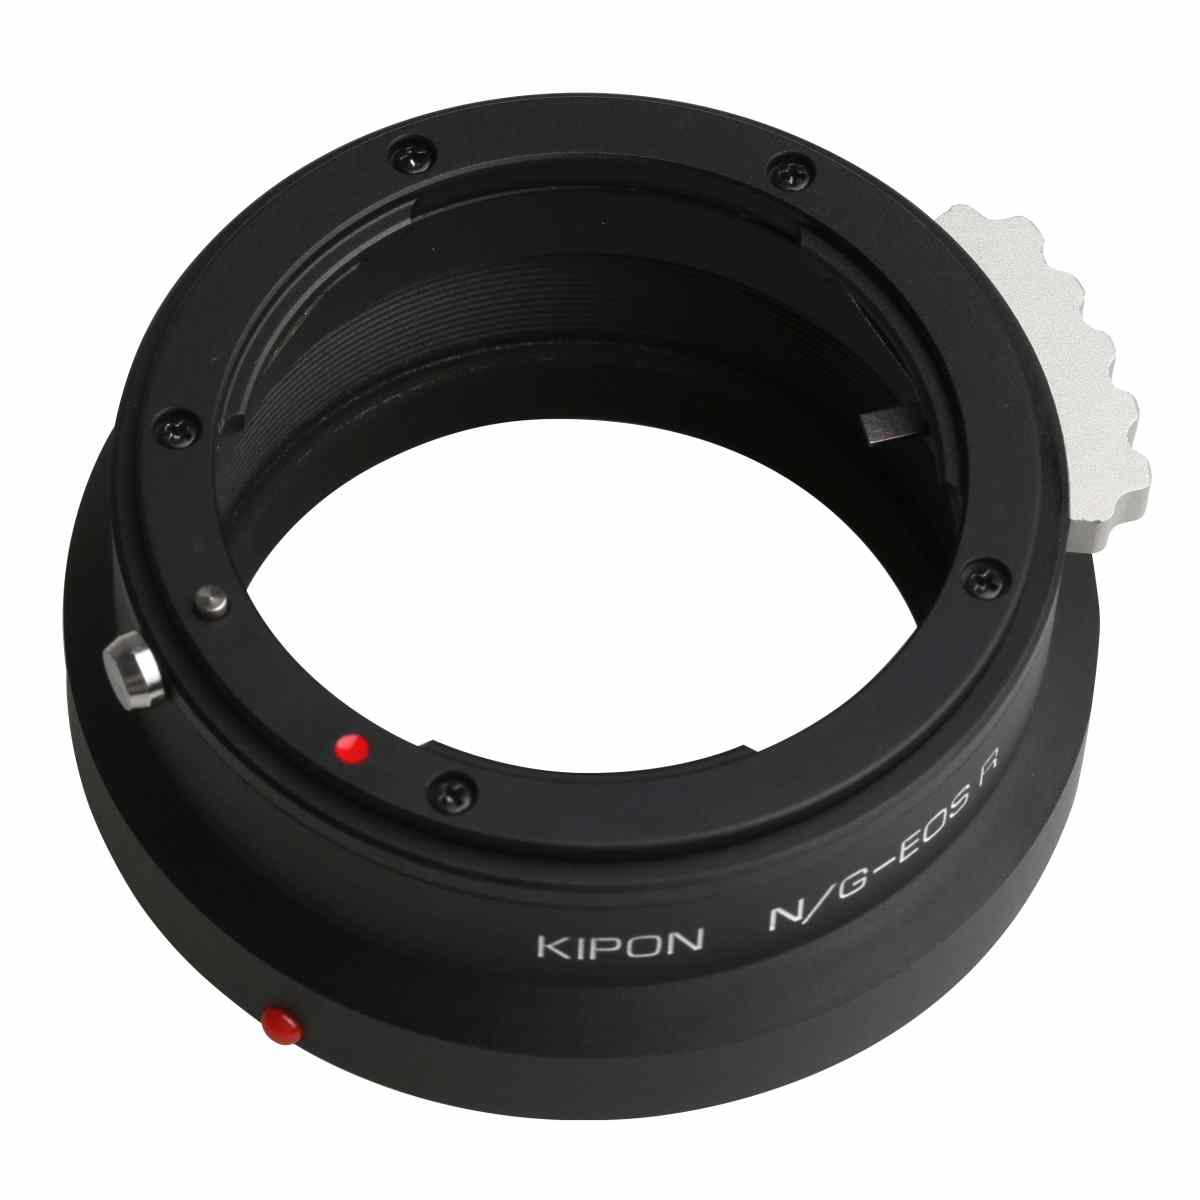 Kipon Adapter Nikon G to Canon R